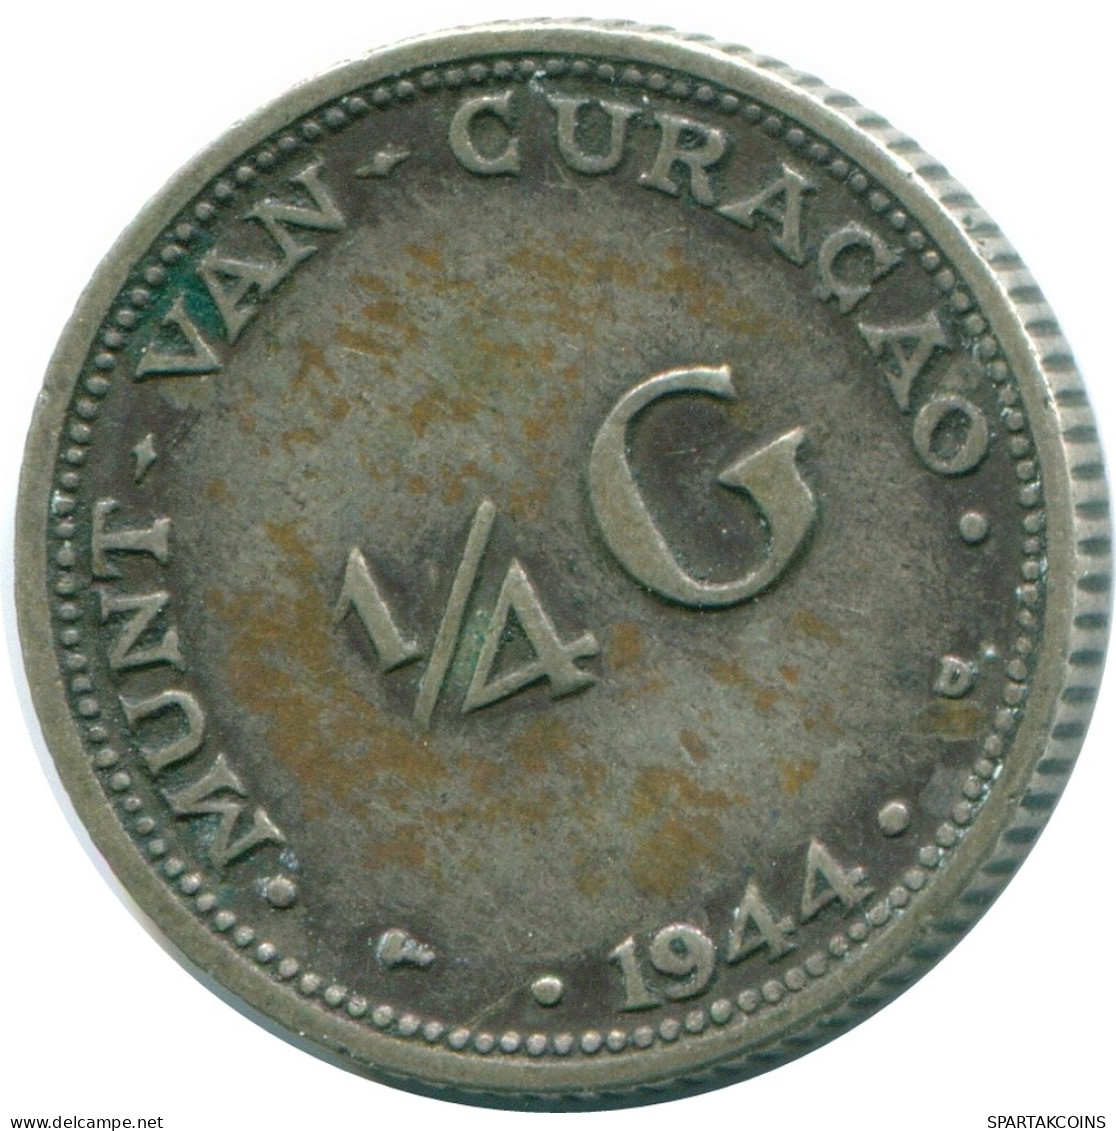 1/4 GULDEN 1944 CURACAO Netherlands SILVER Colonial Coin #NL10624.4.U - Curaçao